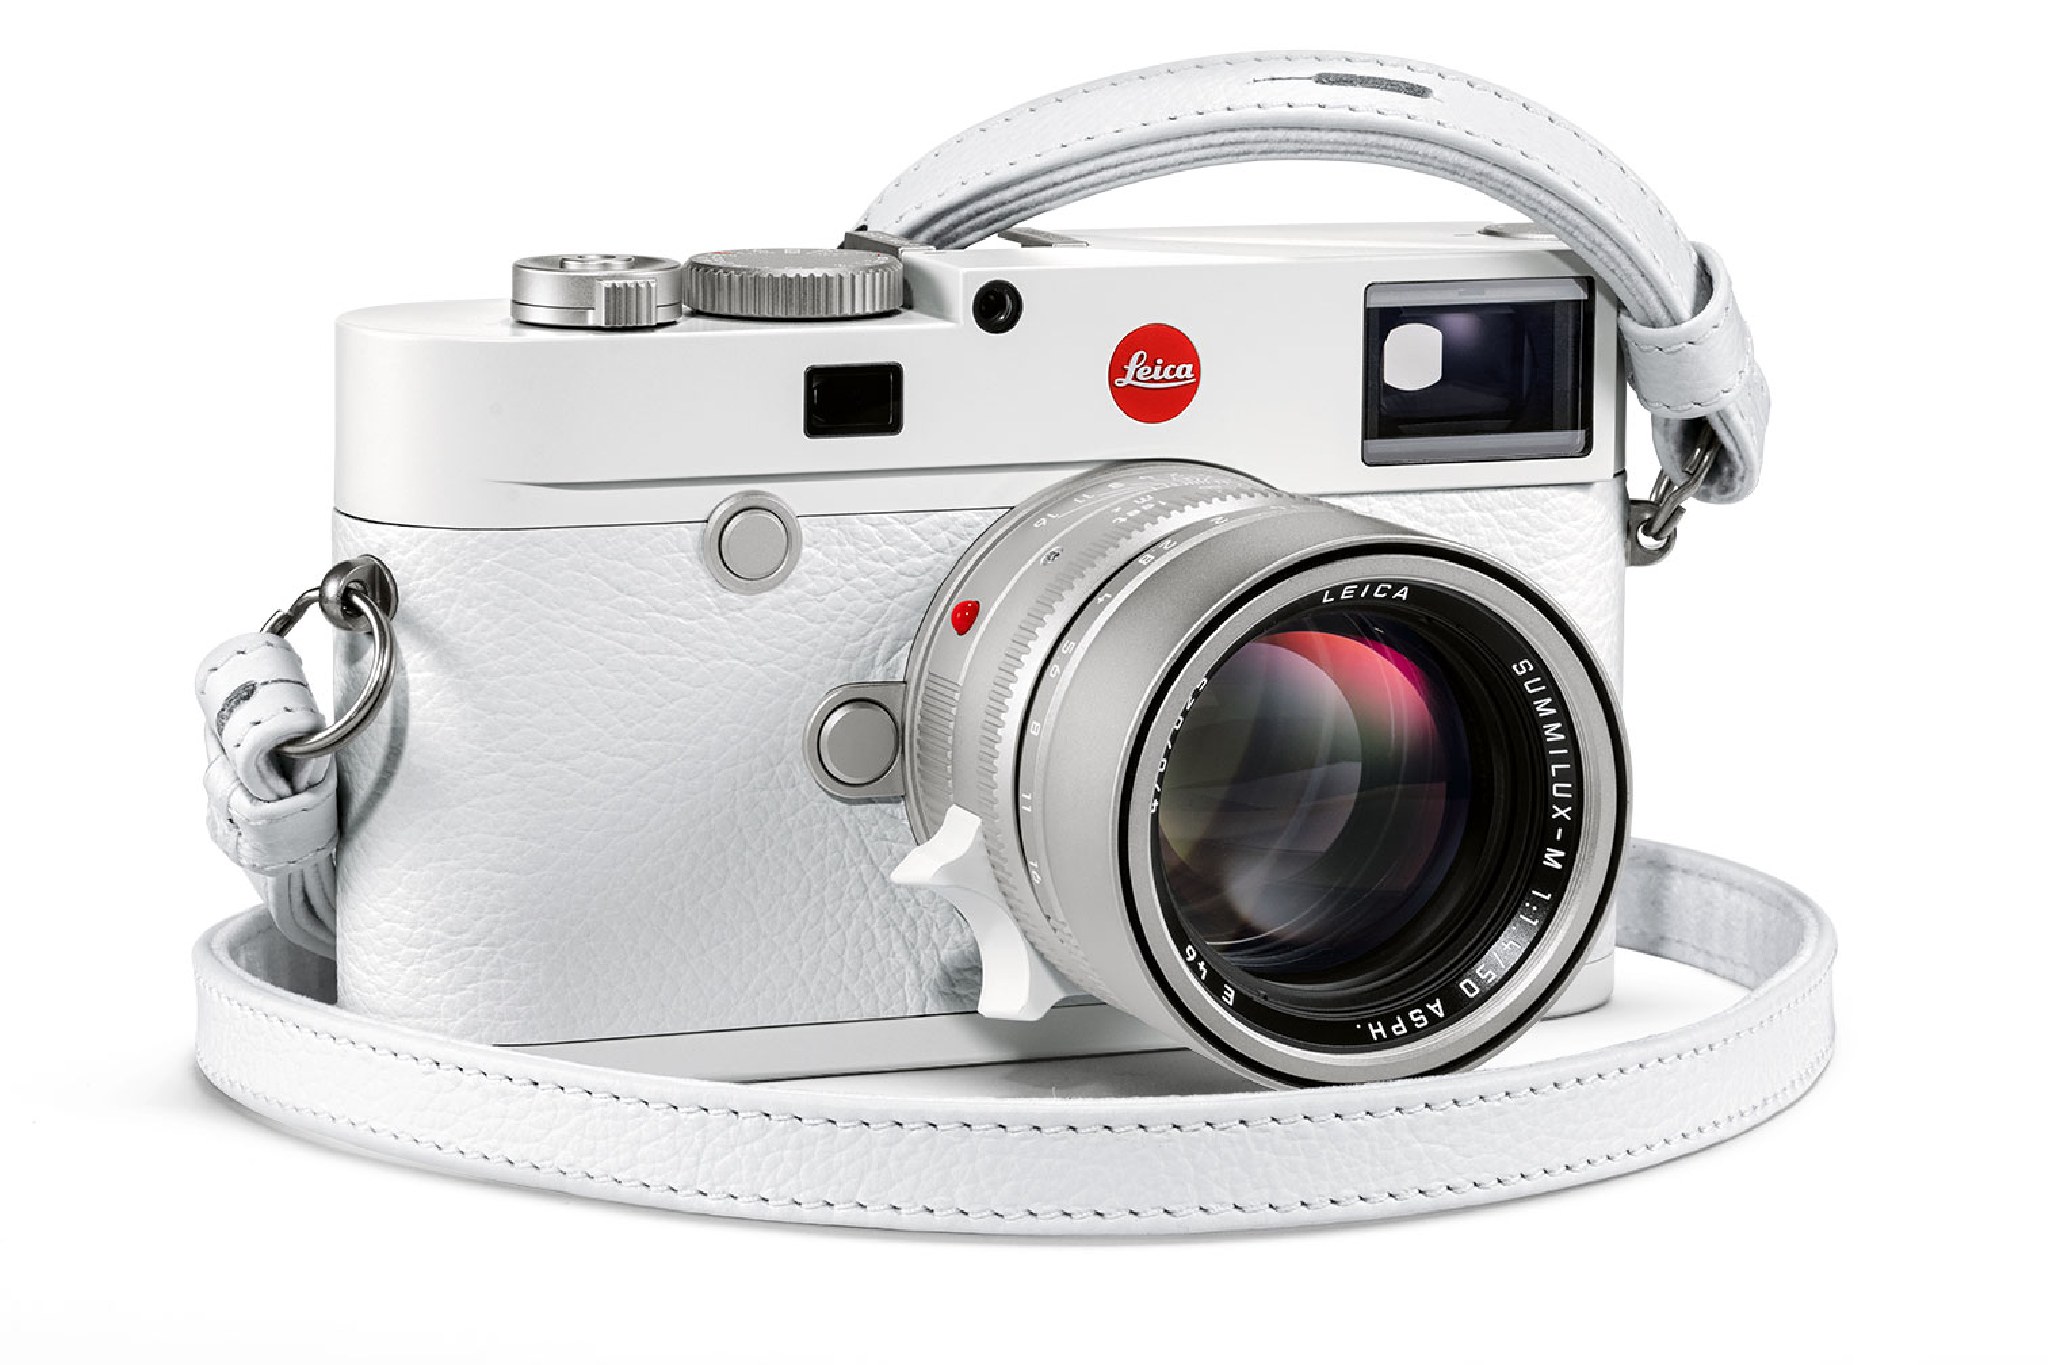 Đang tải all-white-Leica-M10-limited-edition-camera-3.jpg…